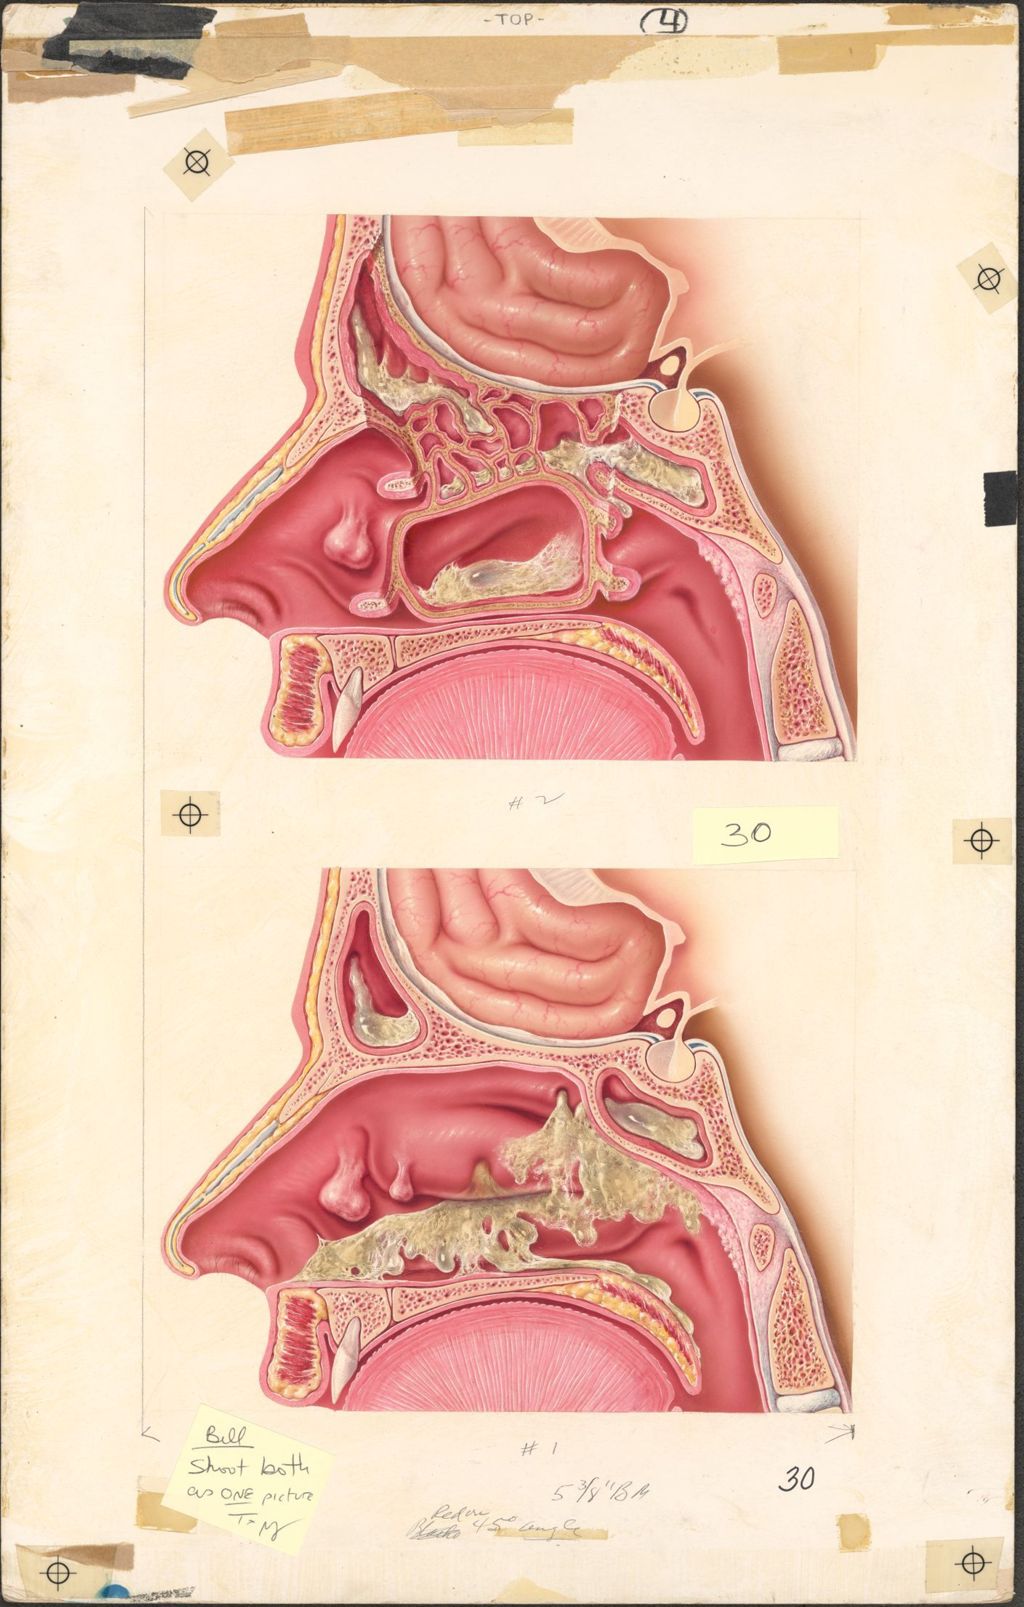 Medical Profiles, NeoHydeltrasol Nasal Spray, Anatomy of Paranasal Sinuses